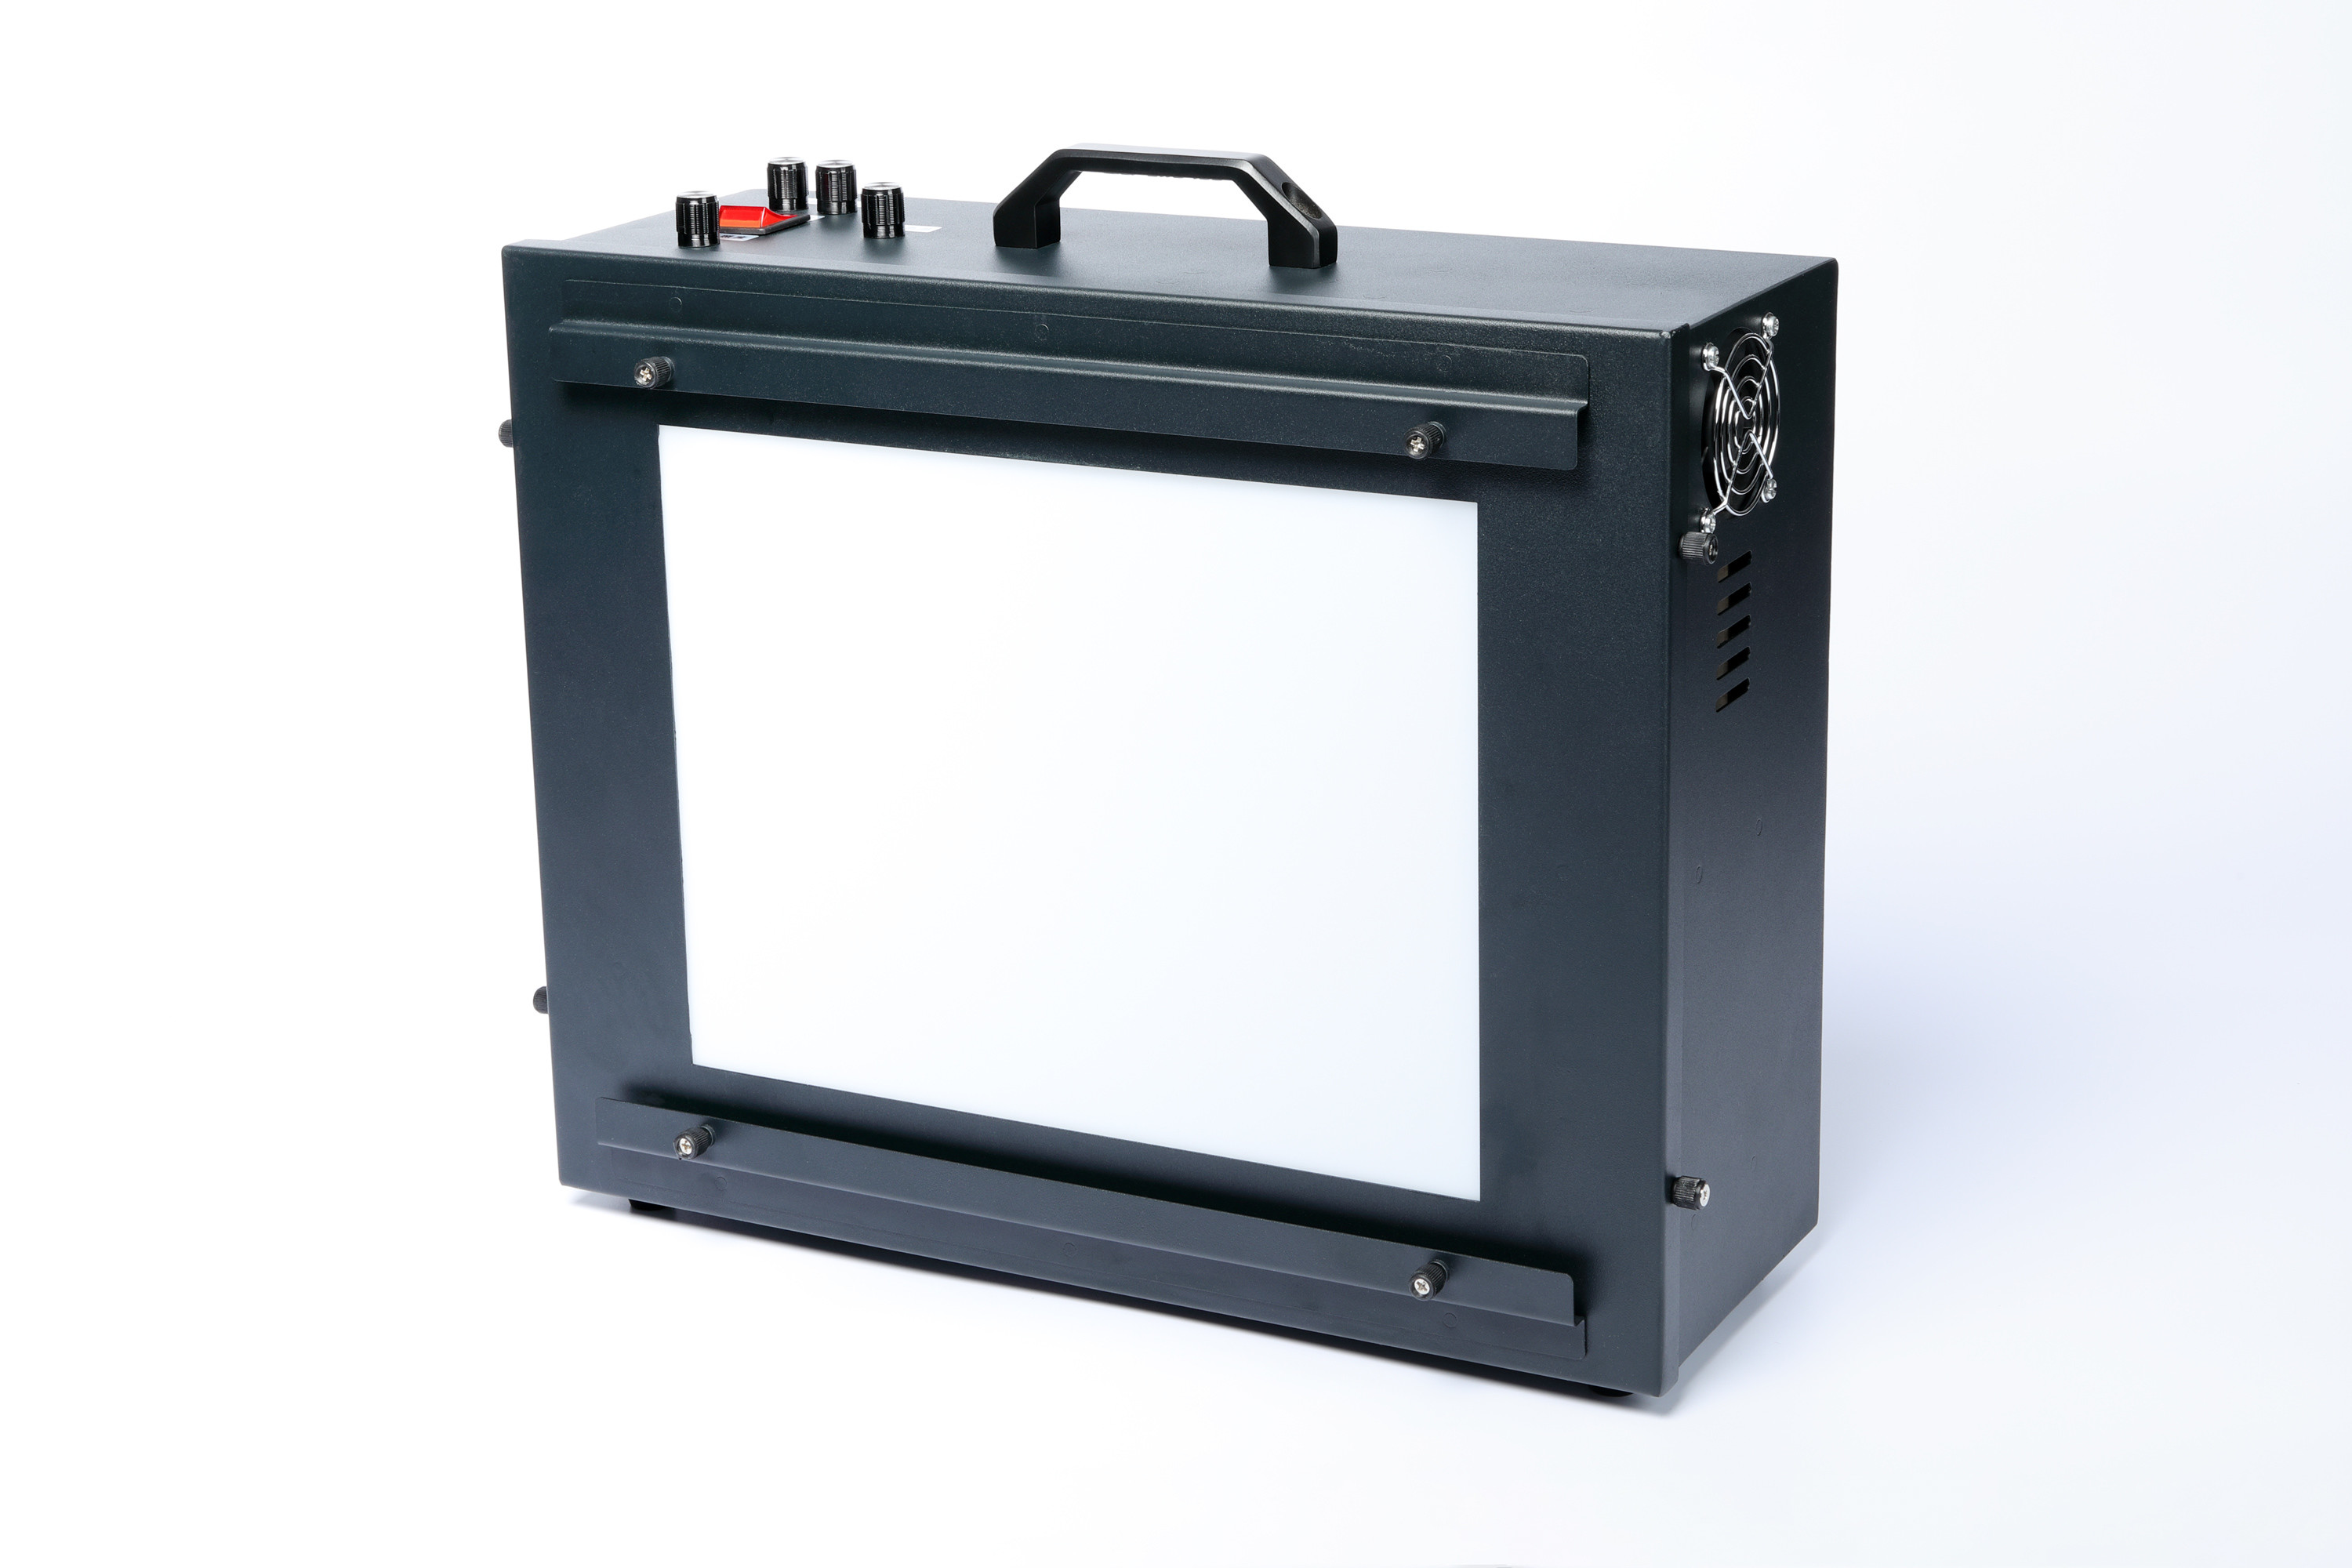  3nh T259000+ high illumination/adjustable color temperature transmission light box Manufactures